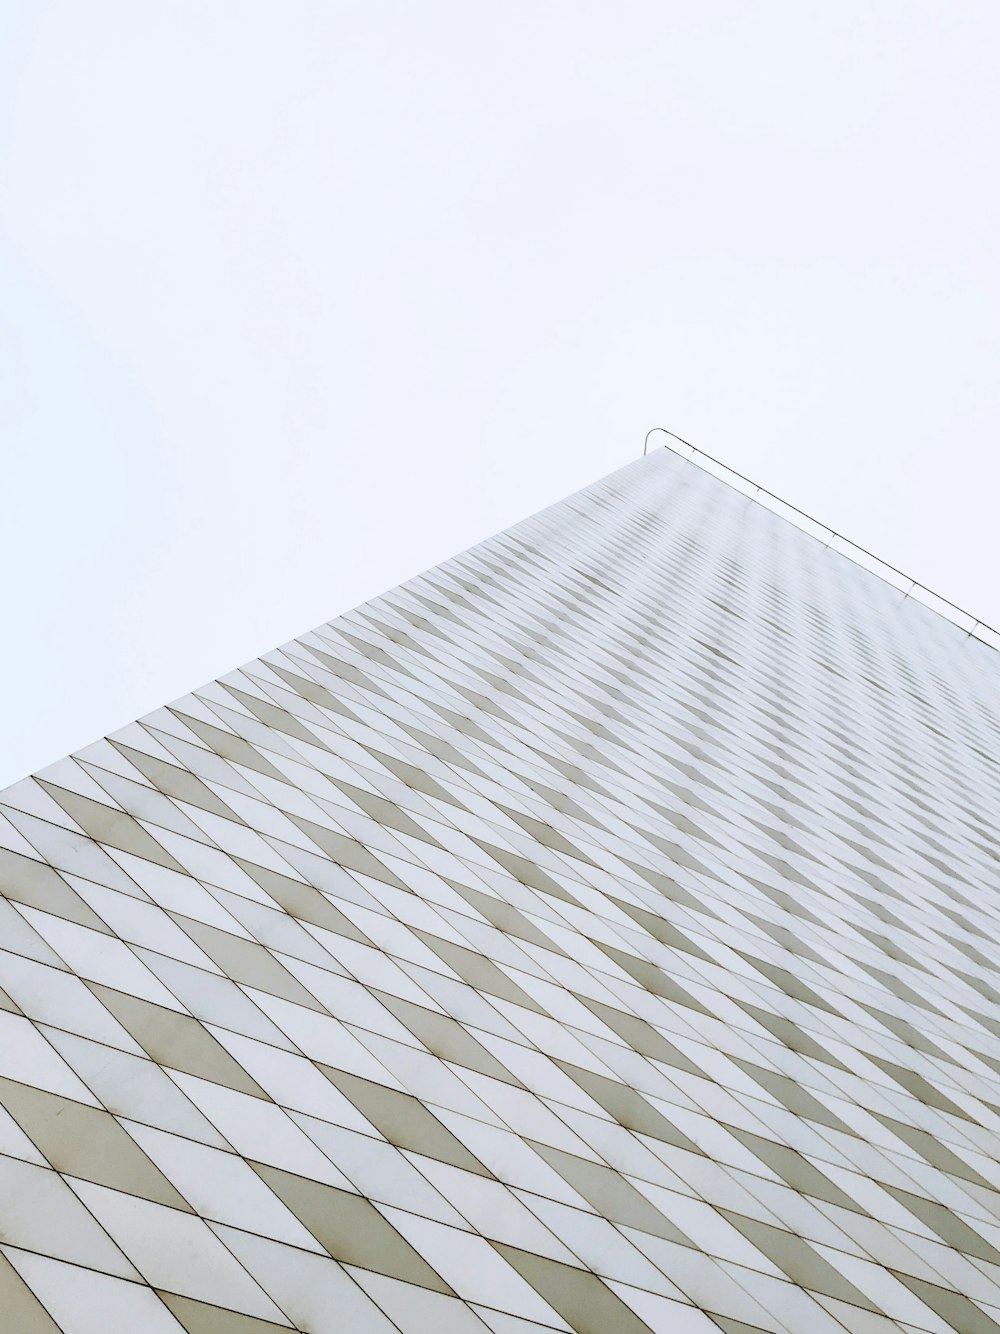 grey concrete high-rise building